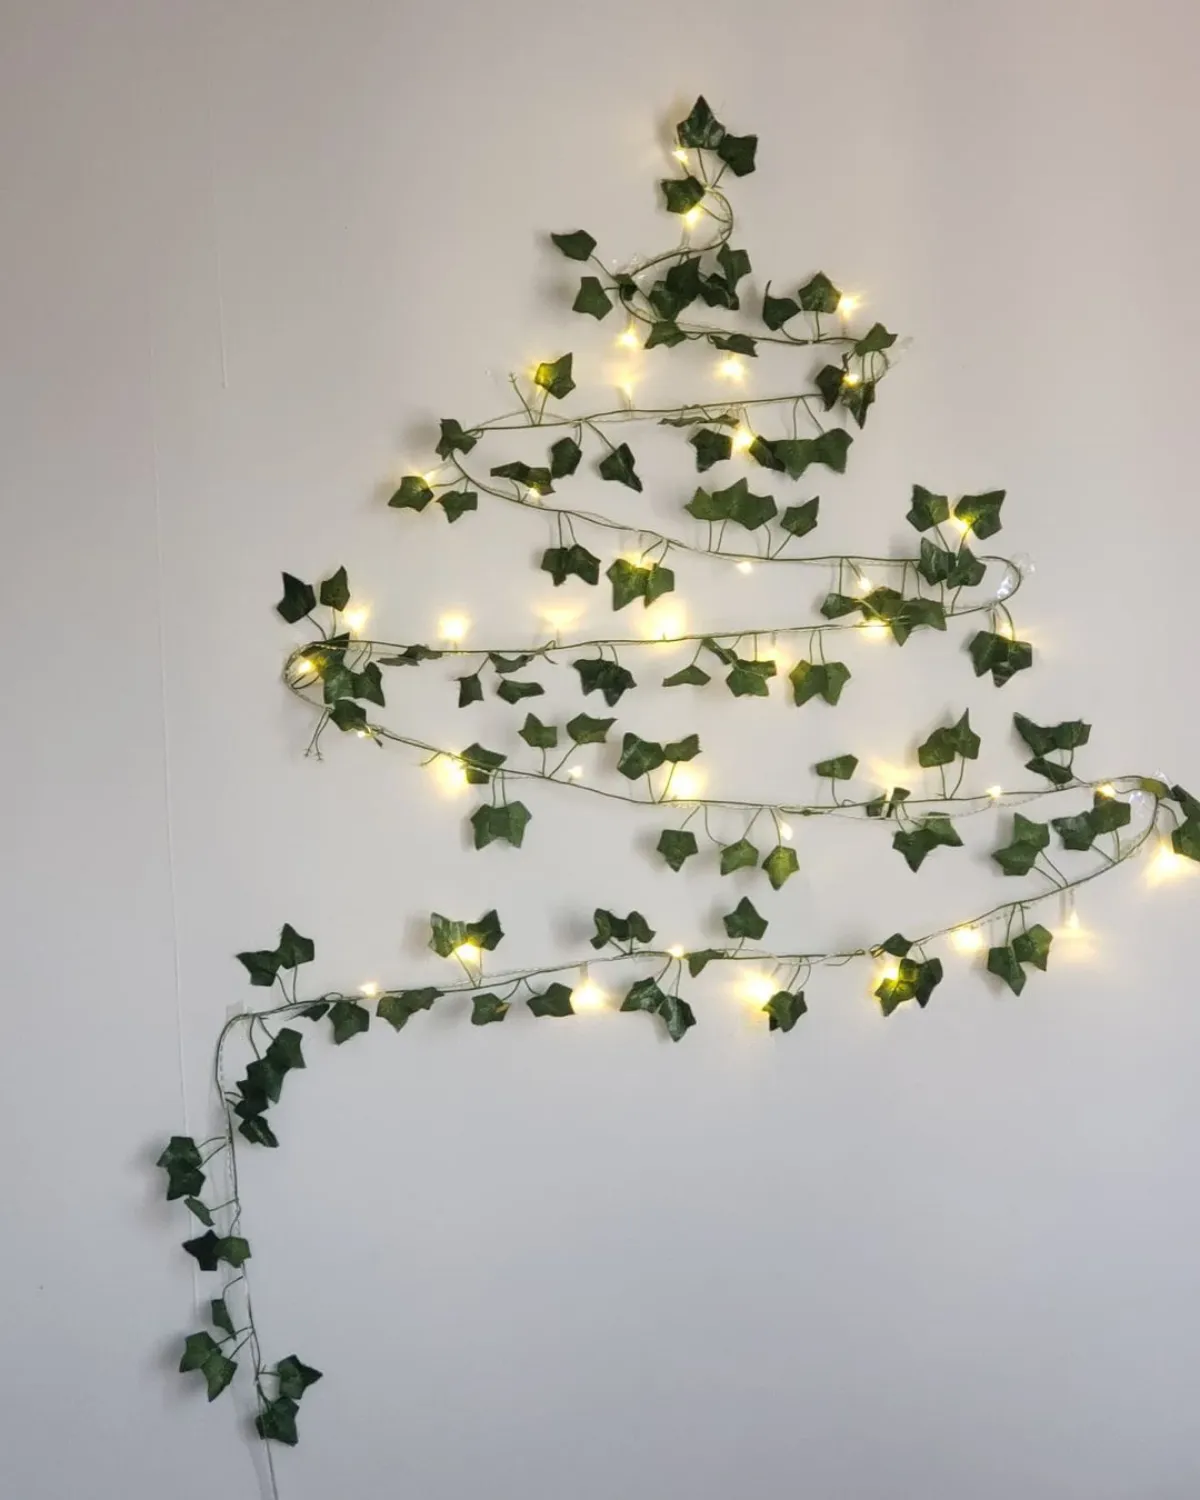 sapin de noel alternatif guirlande luminese a feuilles vertes mur blanc